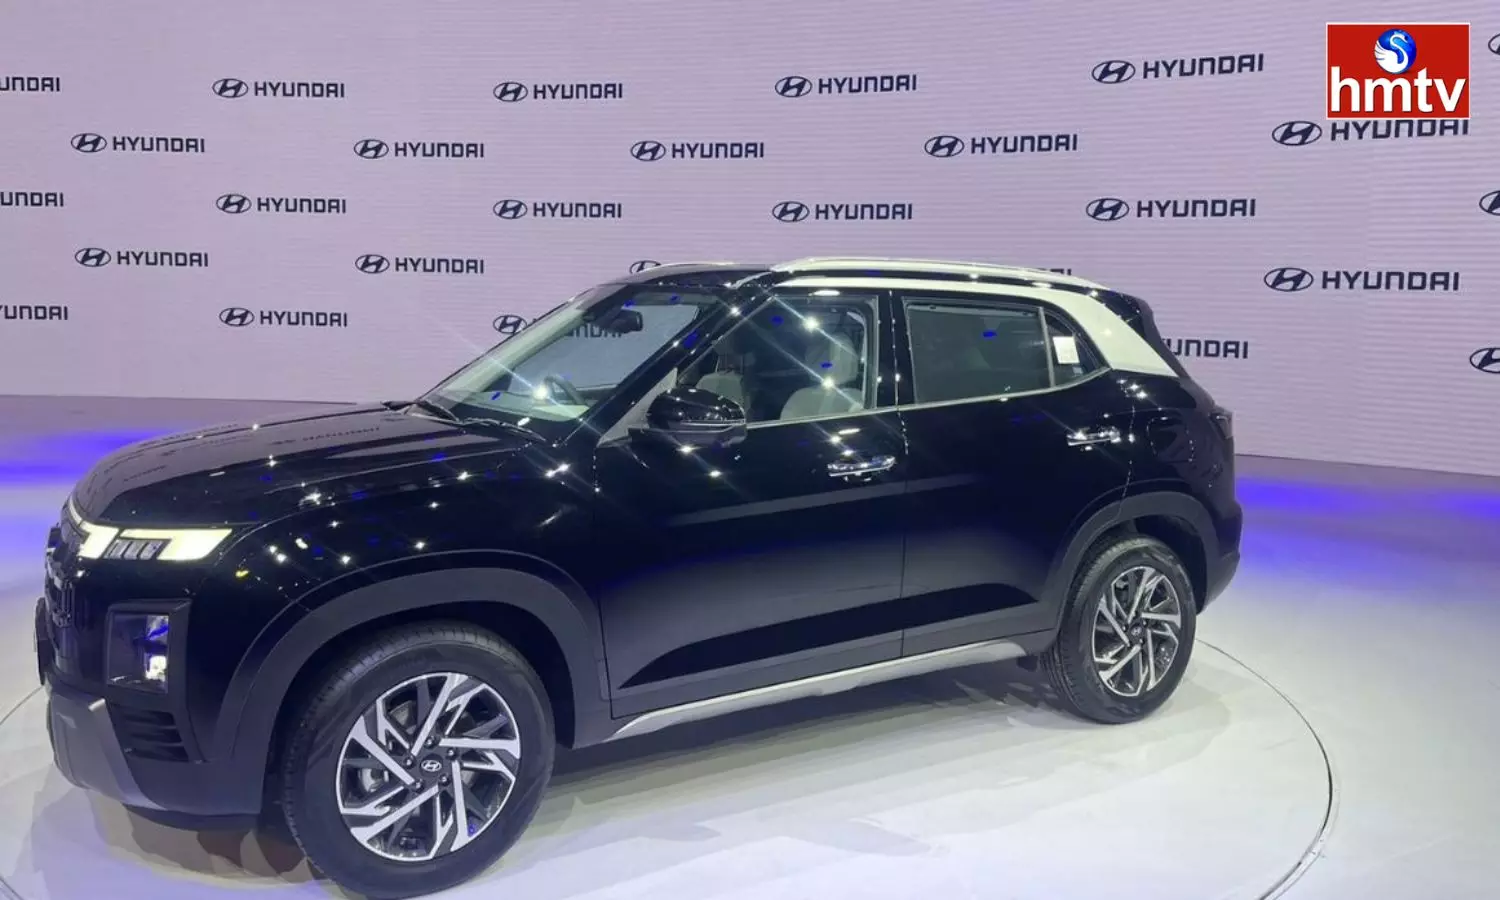 Hyundai Creta Ev May Launch Next Year Check Price And Features